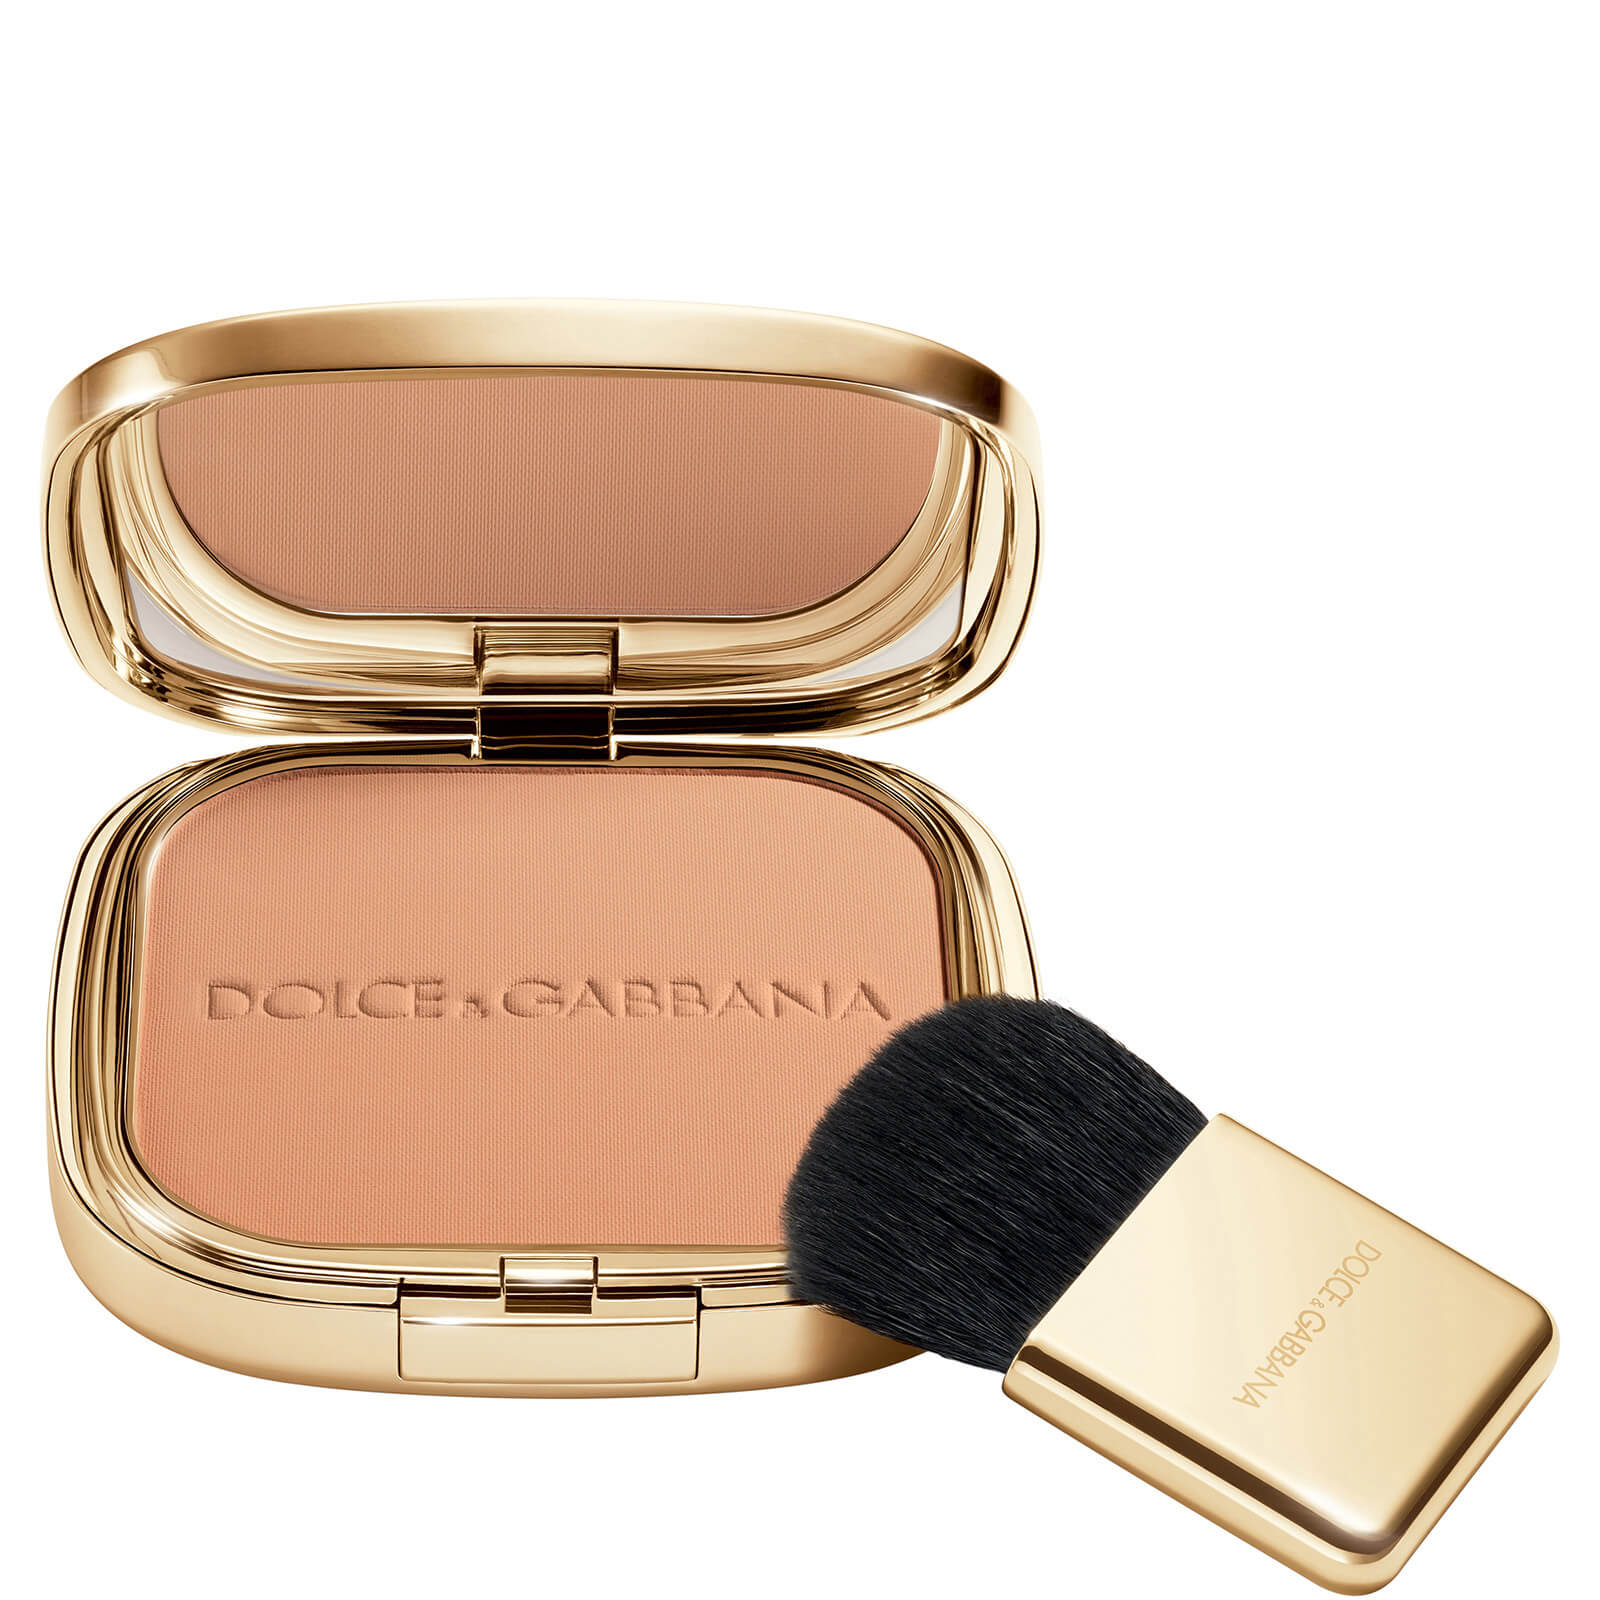 Dolce&Gabbana Perfection Veil Pressed Powder 15g (Various Shades) - 5 Soft Sand